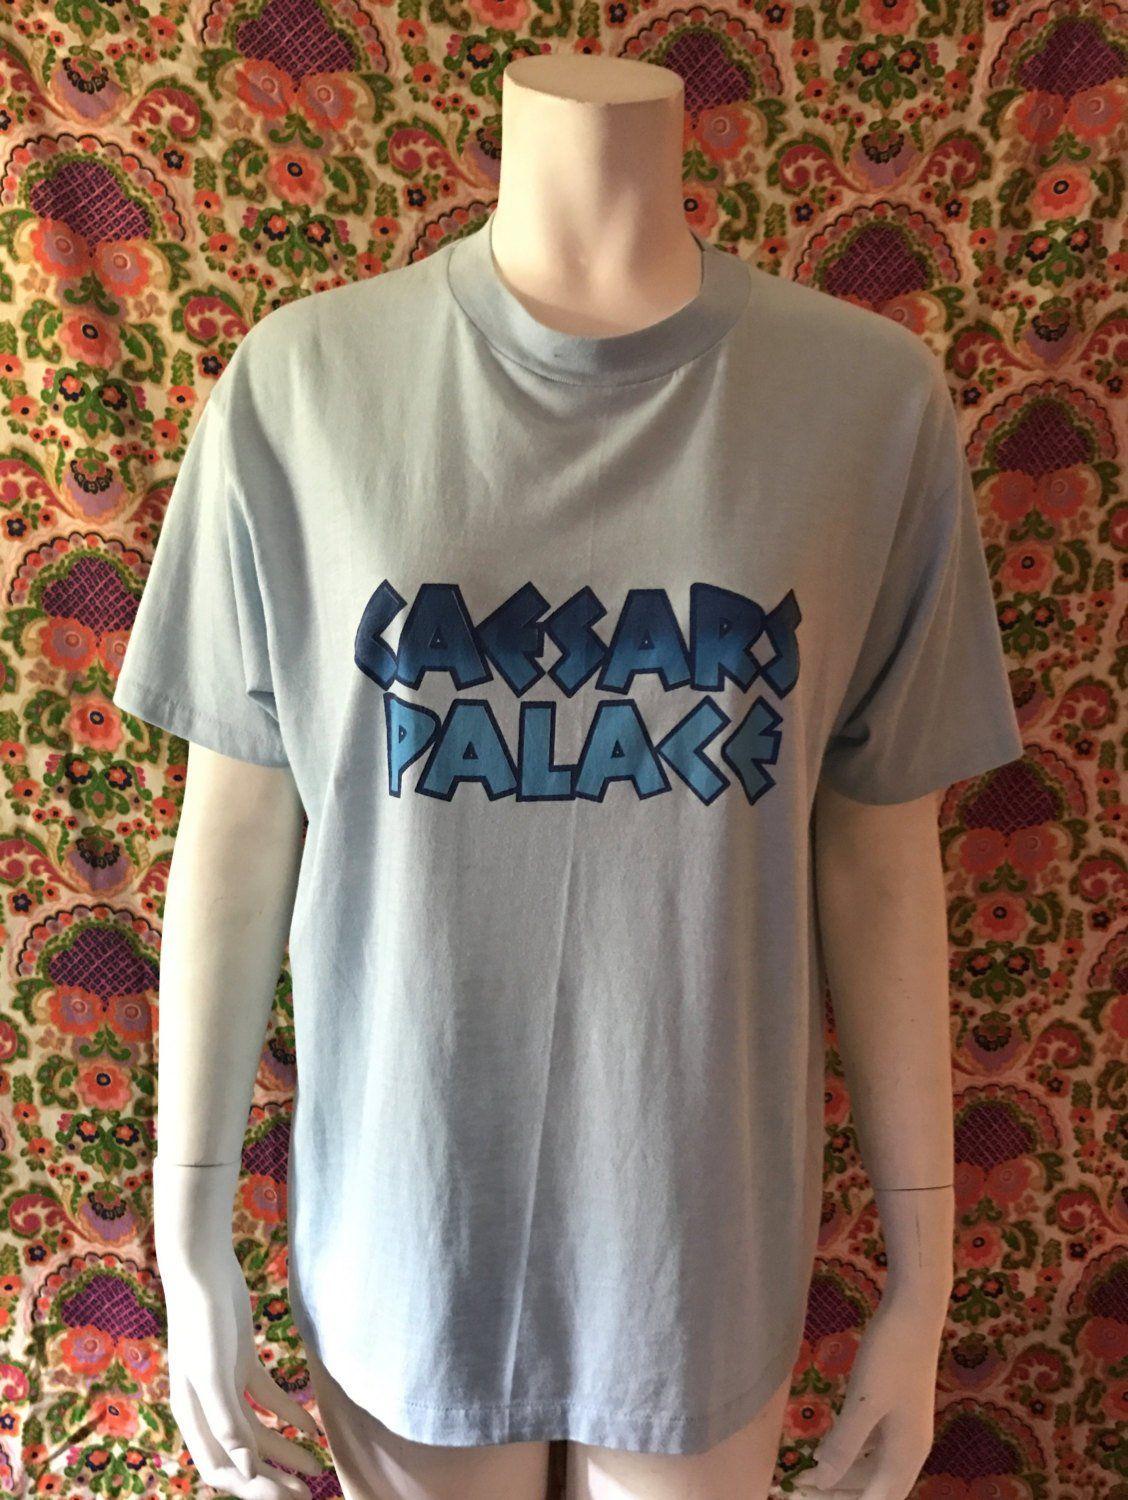 Casesar Palace Shirts Logo - Vintage Caesars Palace T Shirt PAPER THIN! E10190947034005635M